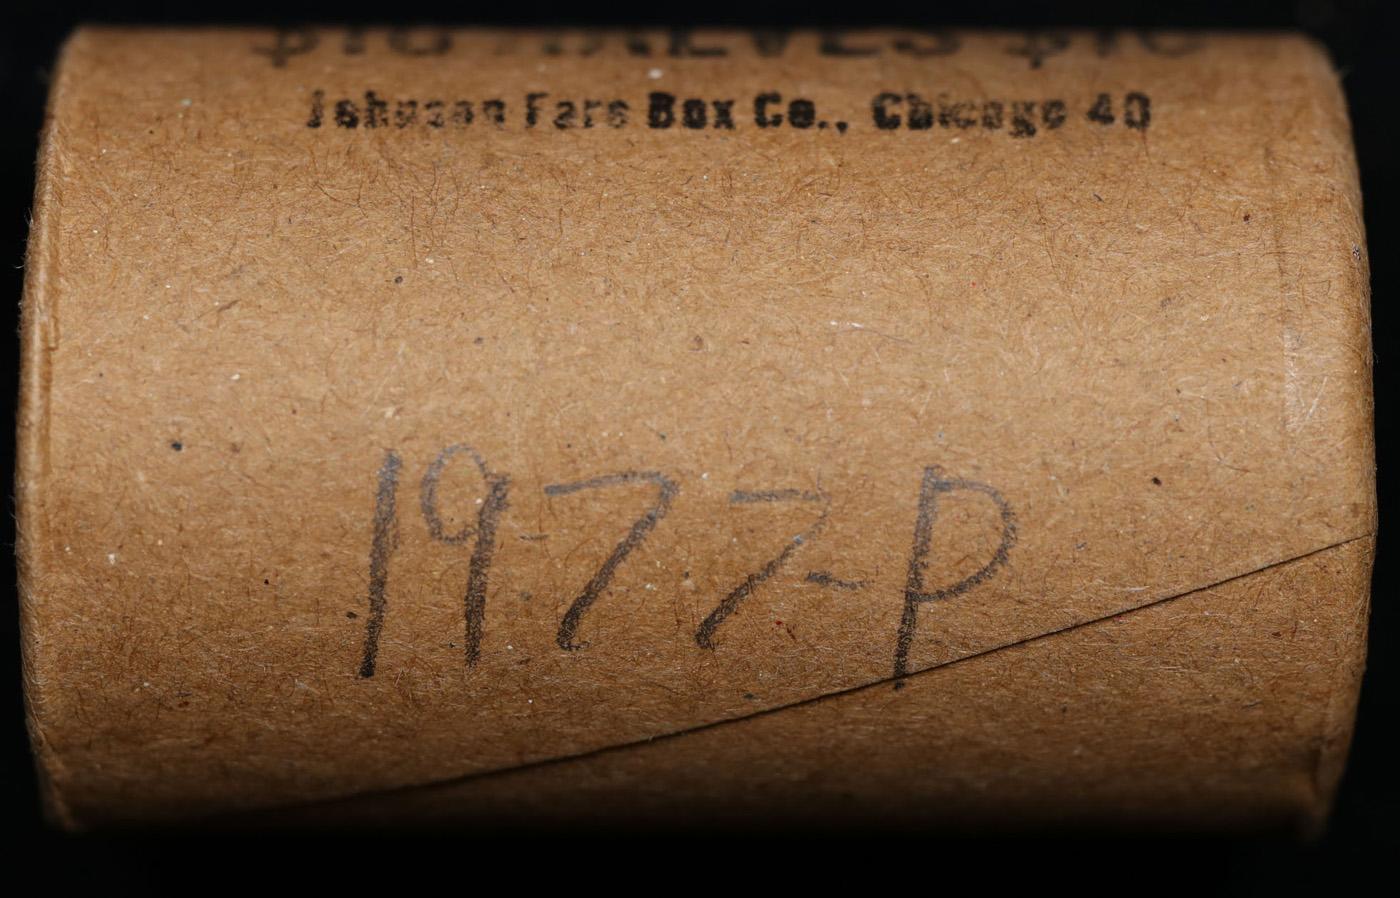 BU Shotgun Kennedy 50c roll, 1977-p 20 pcs Federal Reserve Bank of Minneapolis Wrapper $10